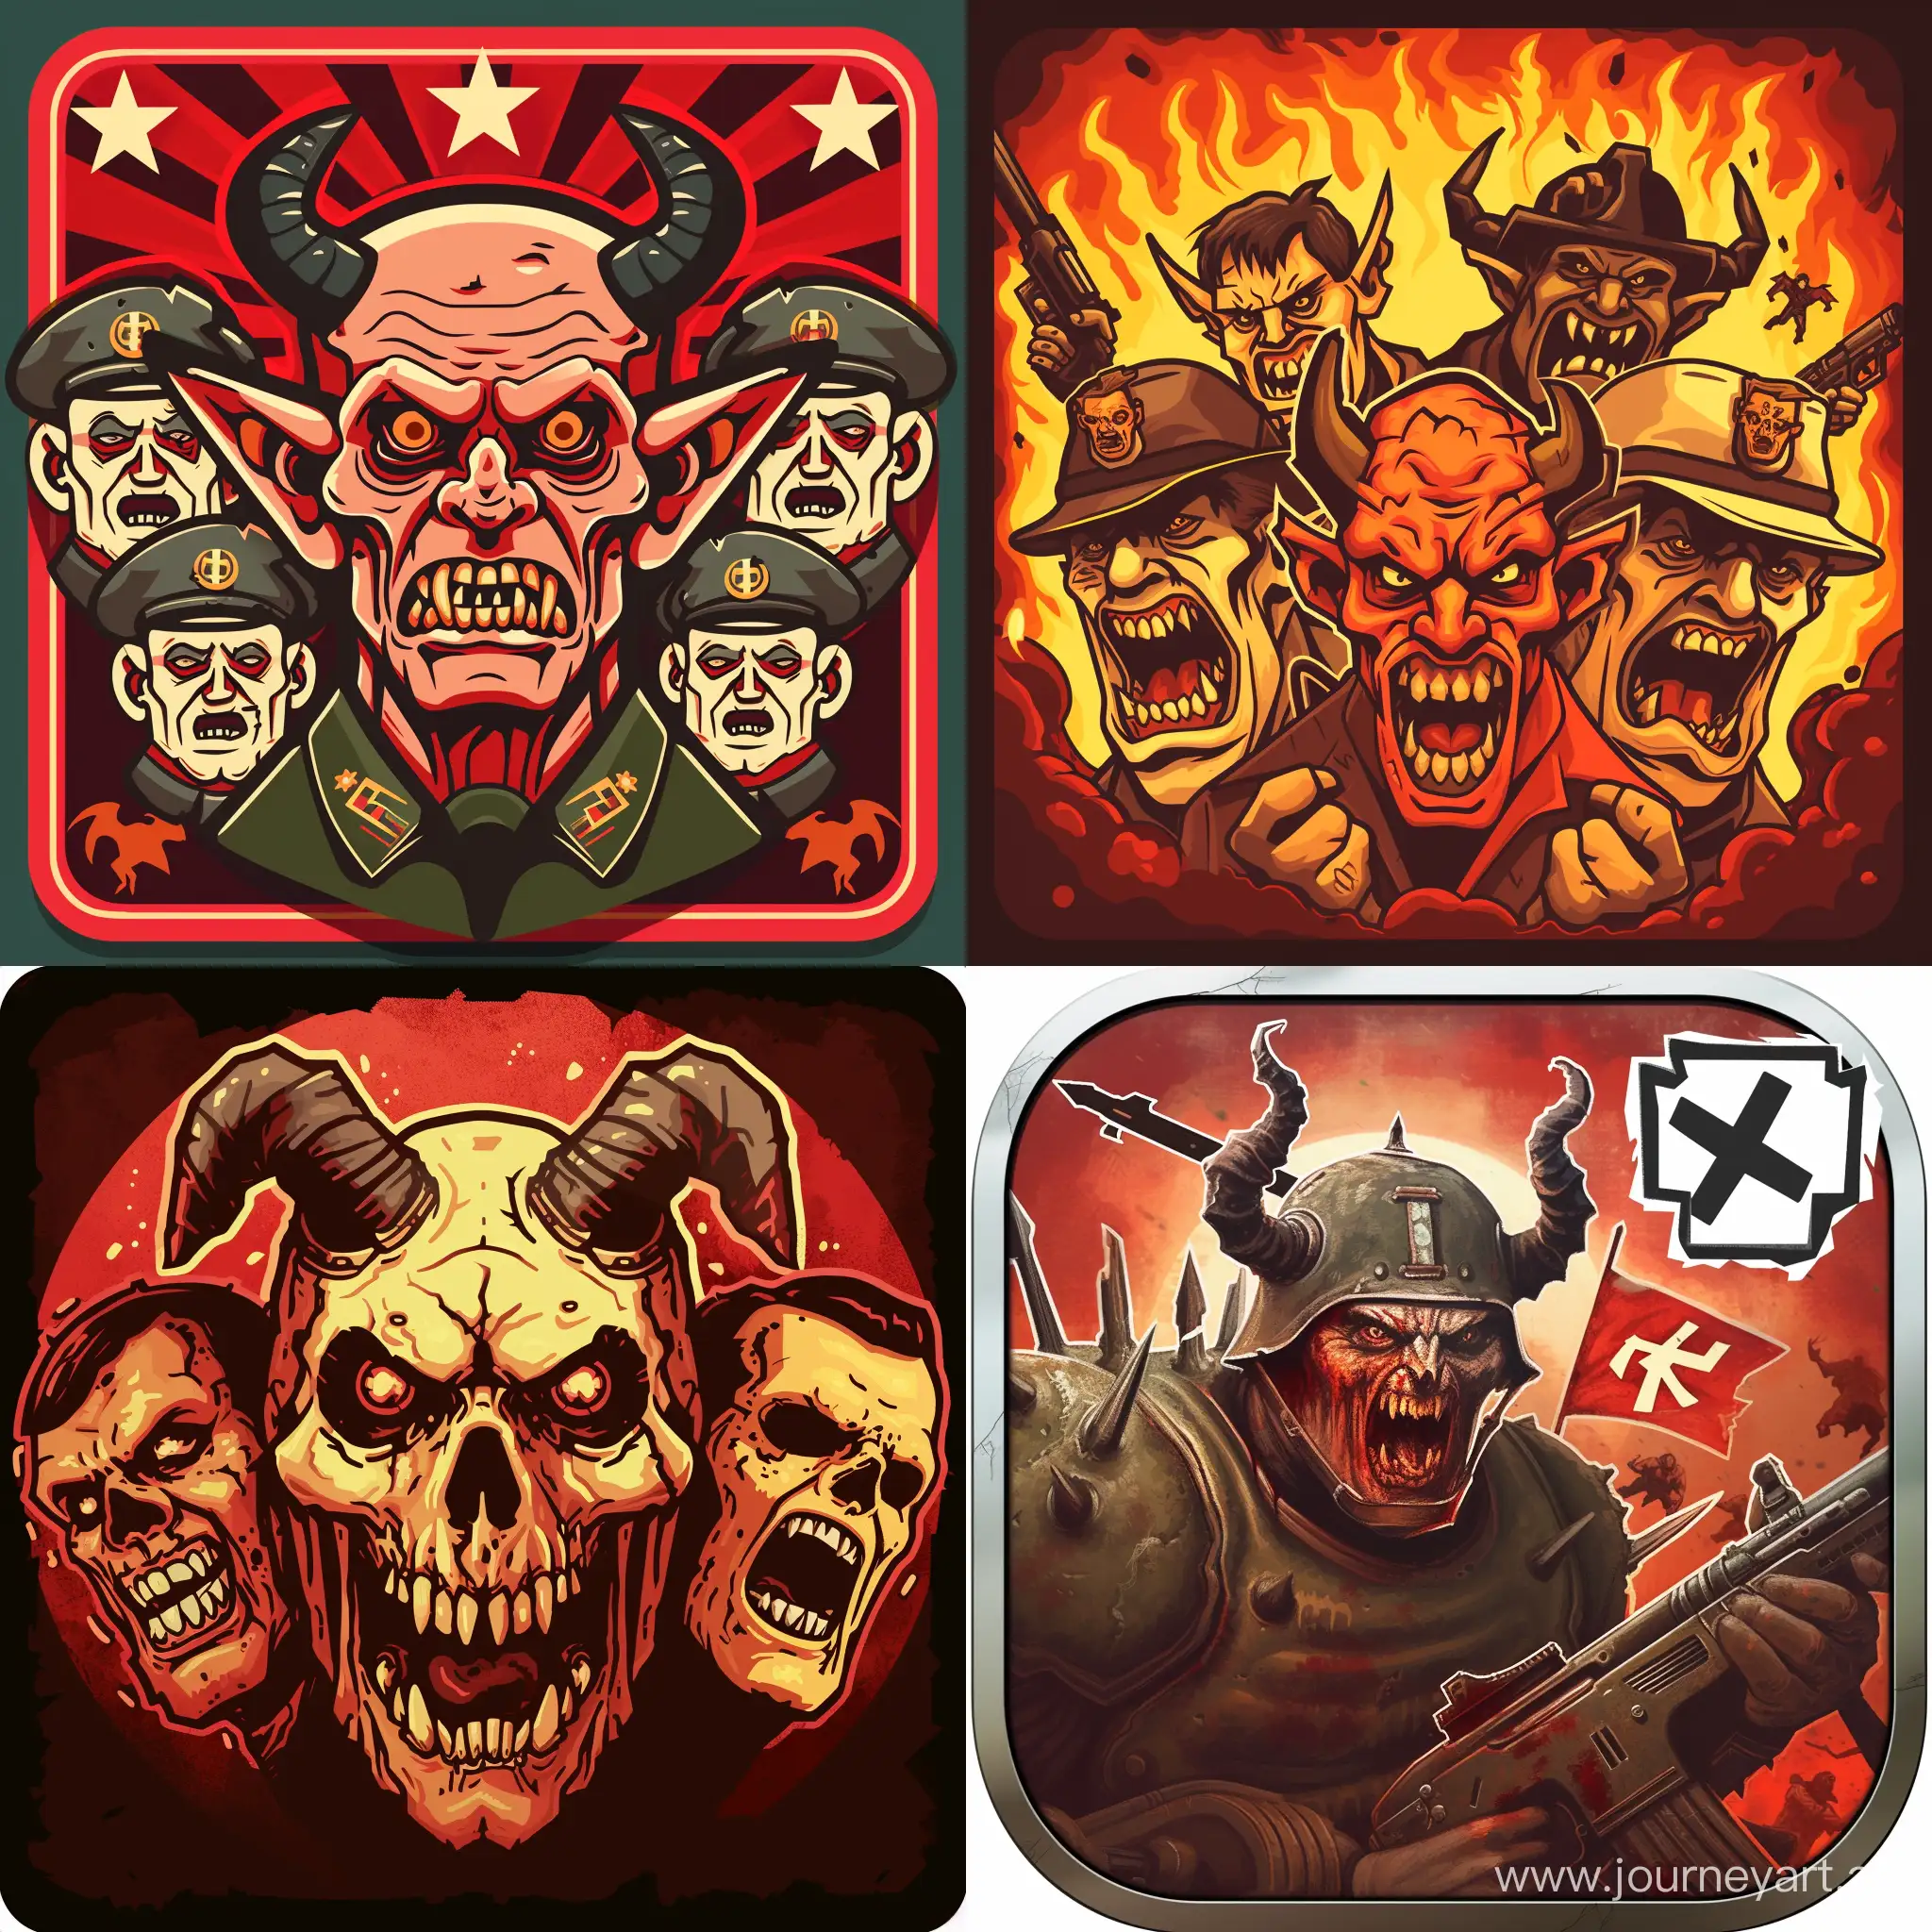 Demonic-Warfare-Iconic-Game-Art-in-the-Style-of-Doom